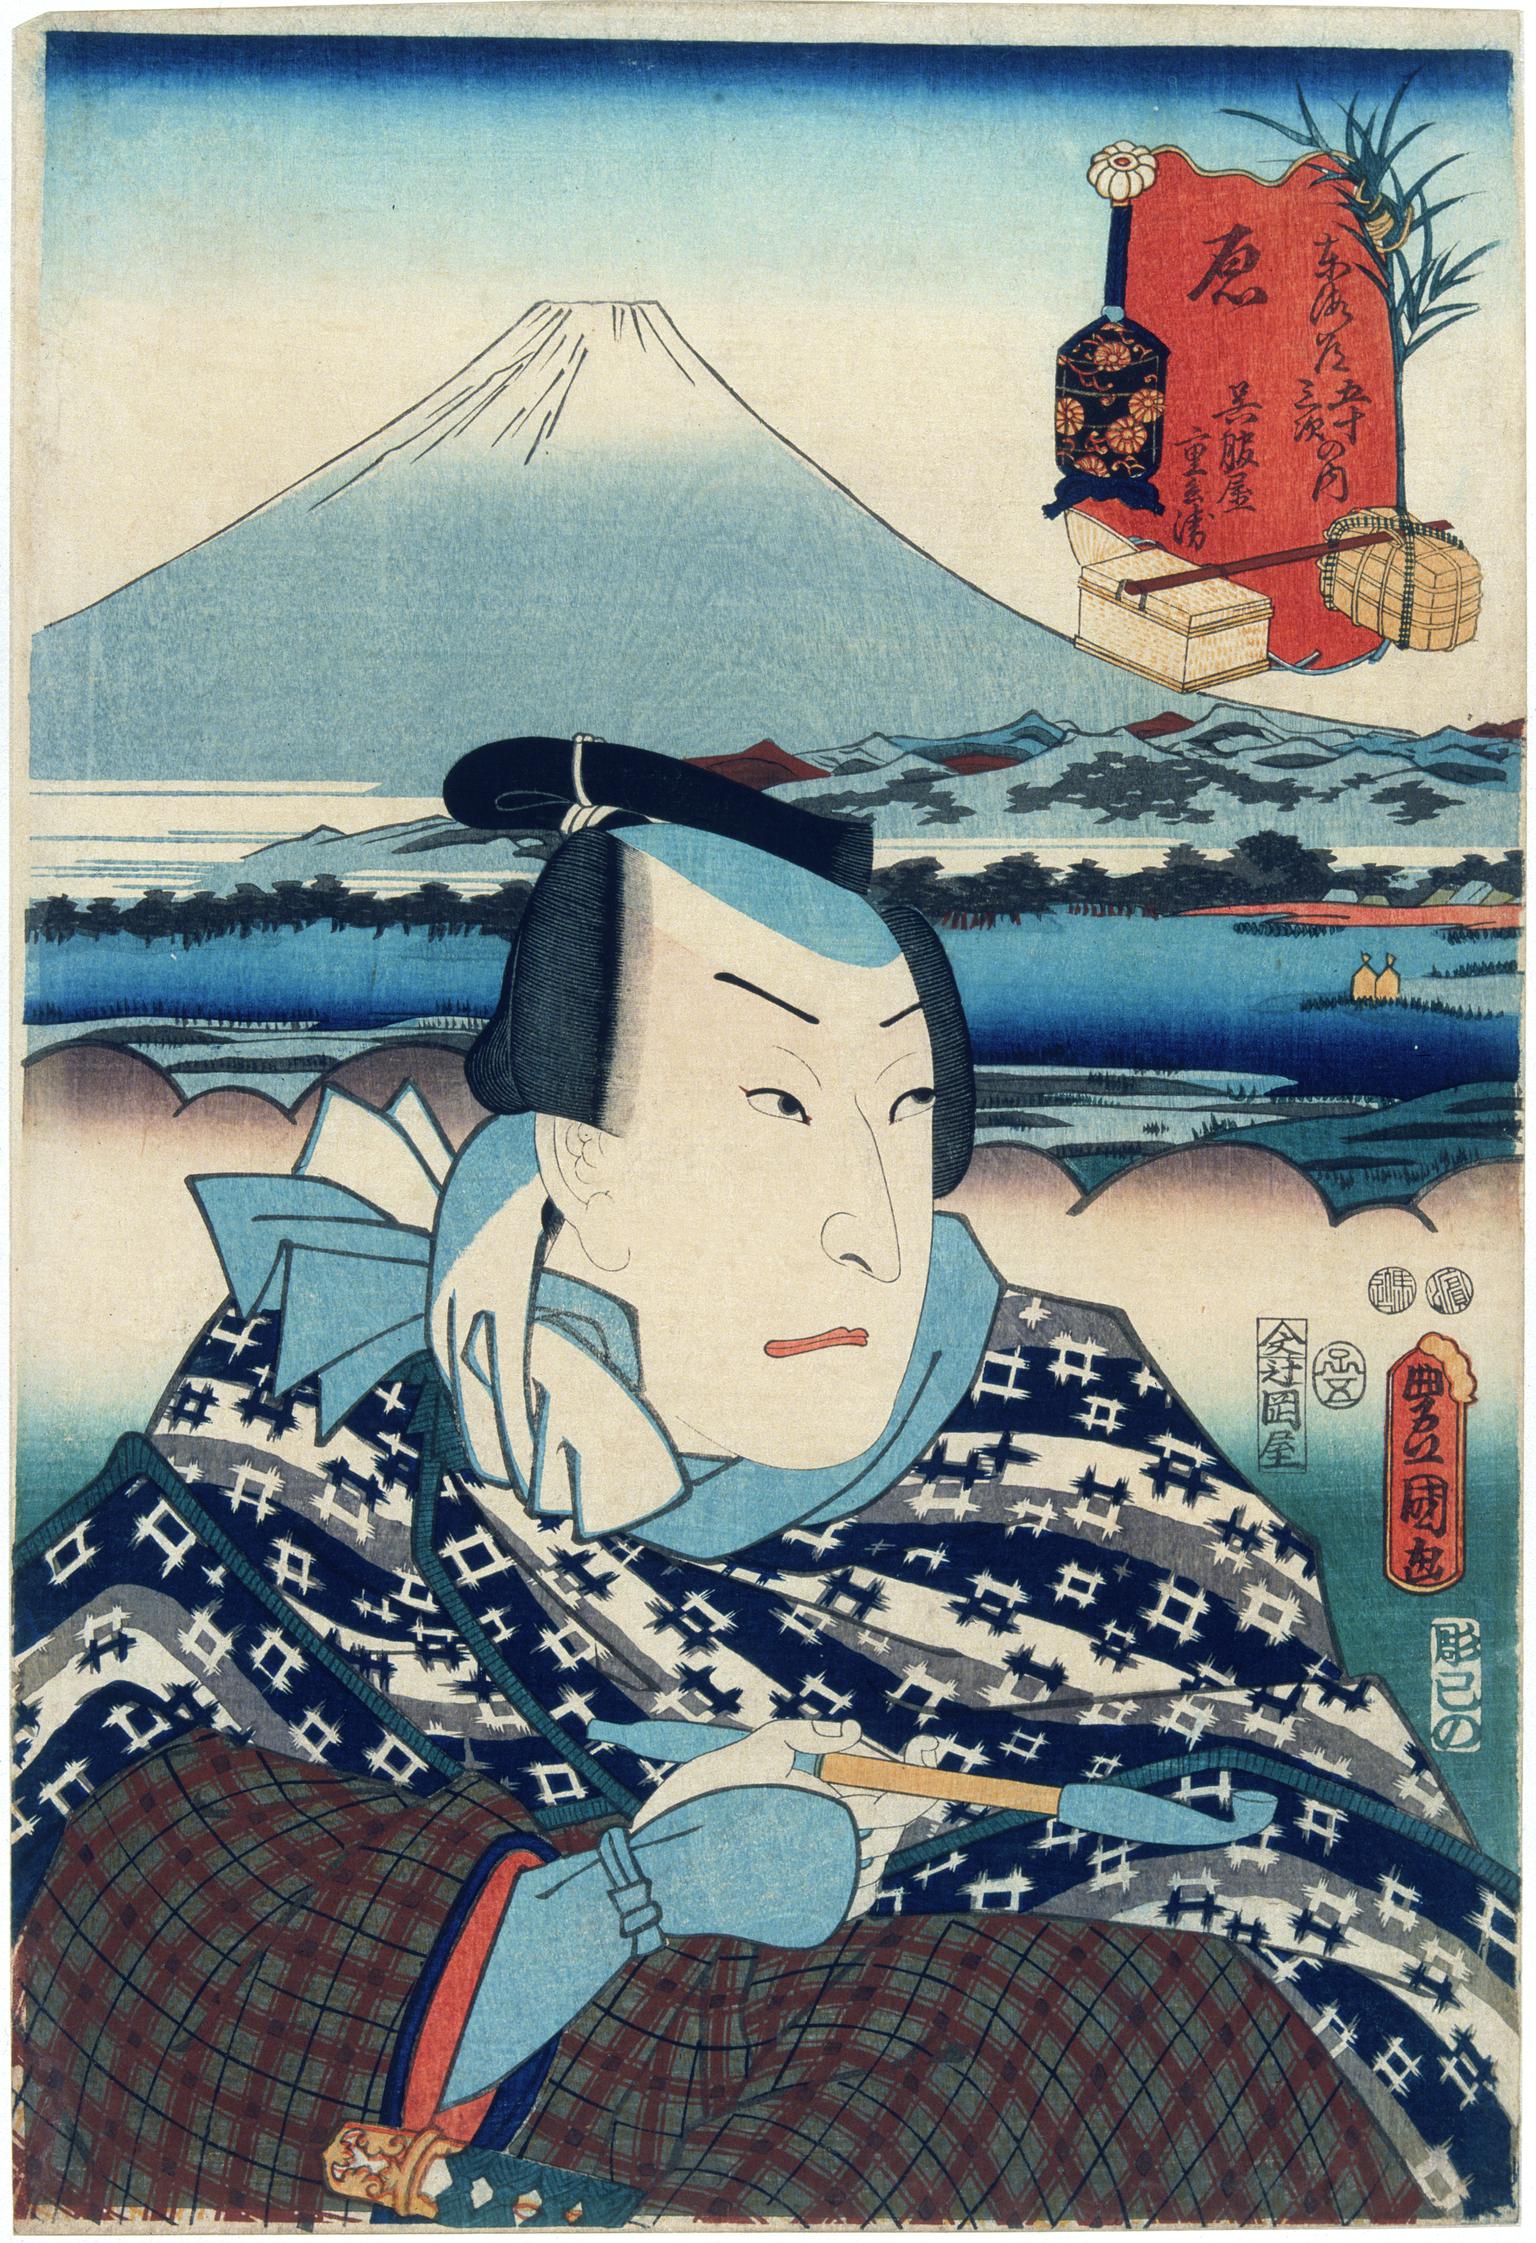 The Fifty-three stages of the Tokaido: Hara, Gofukuya Jubei